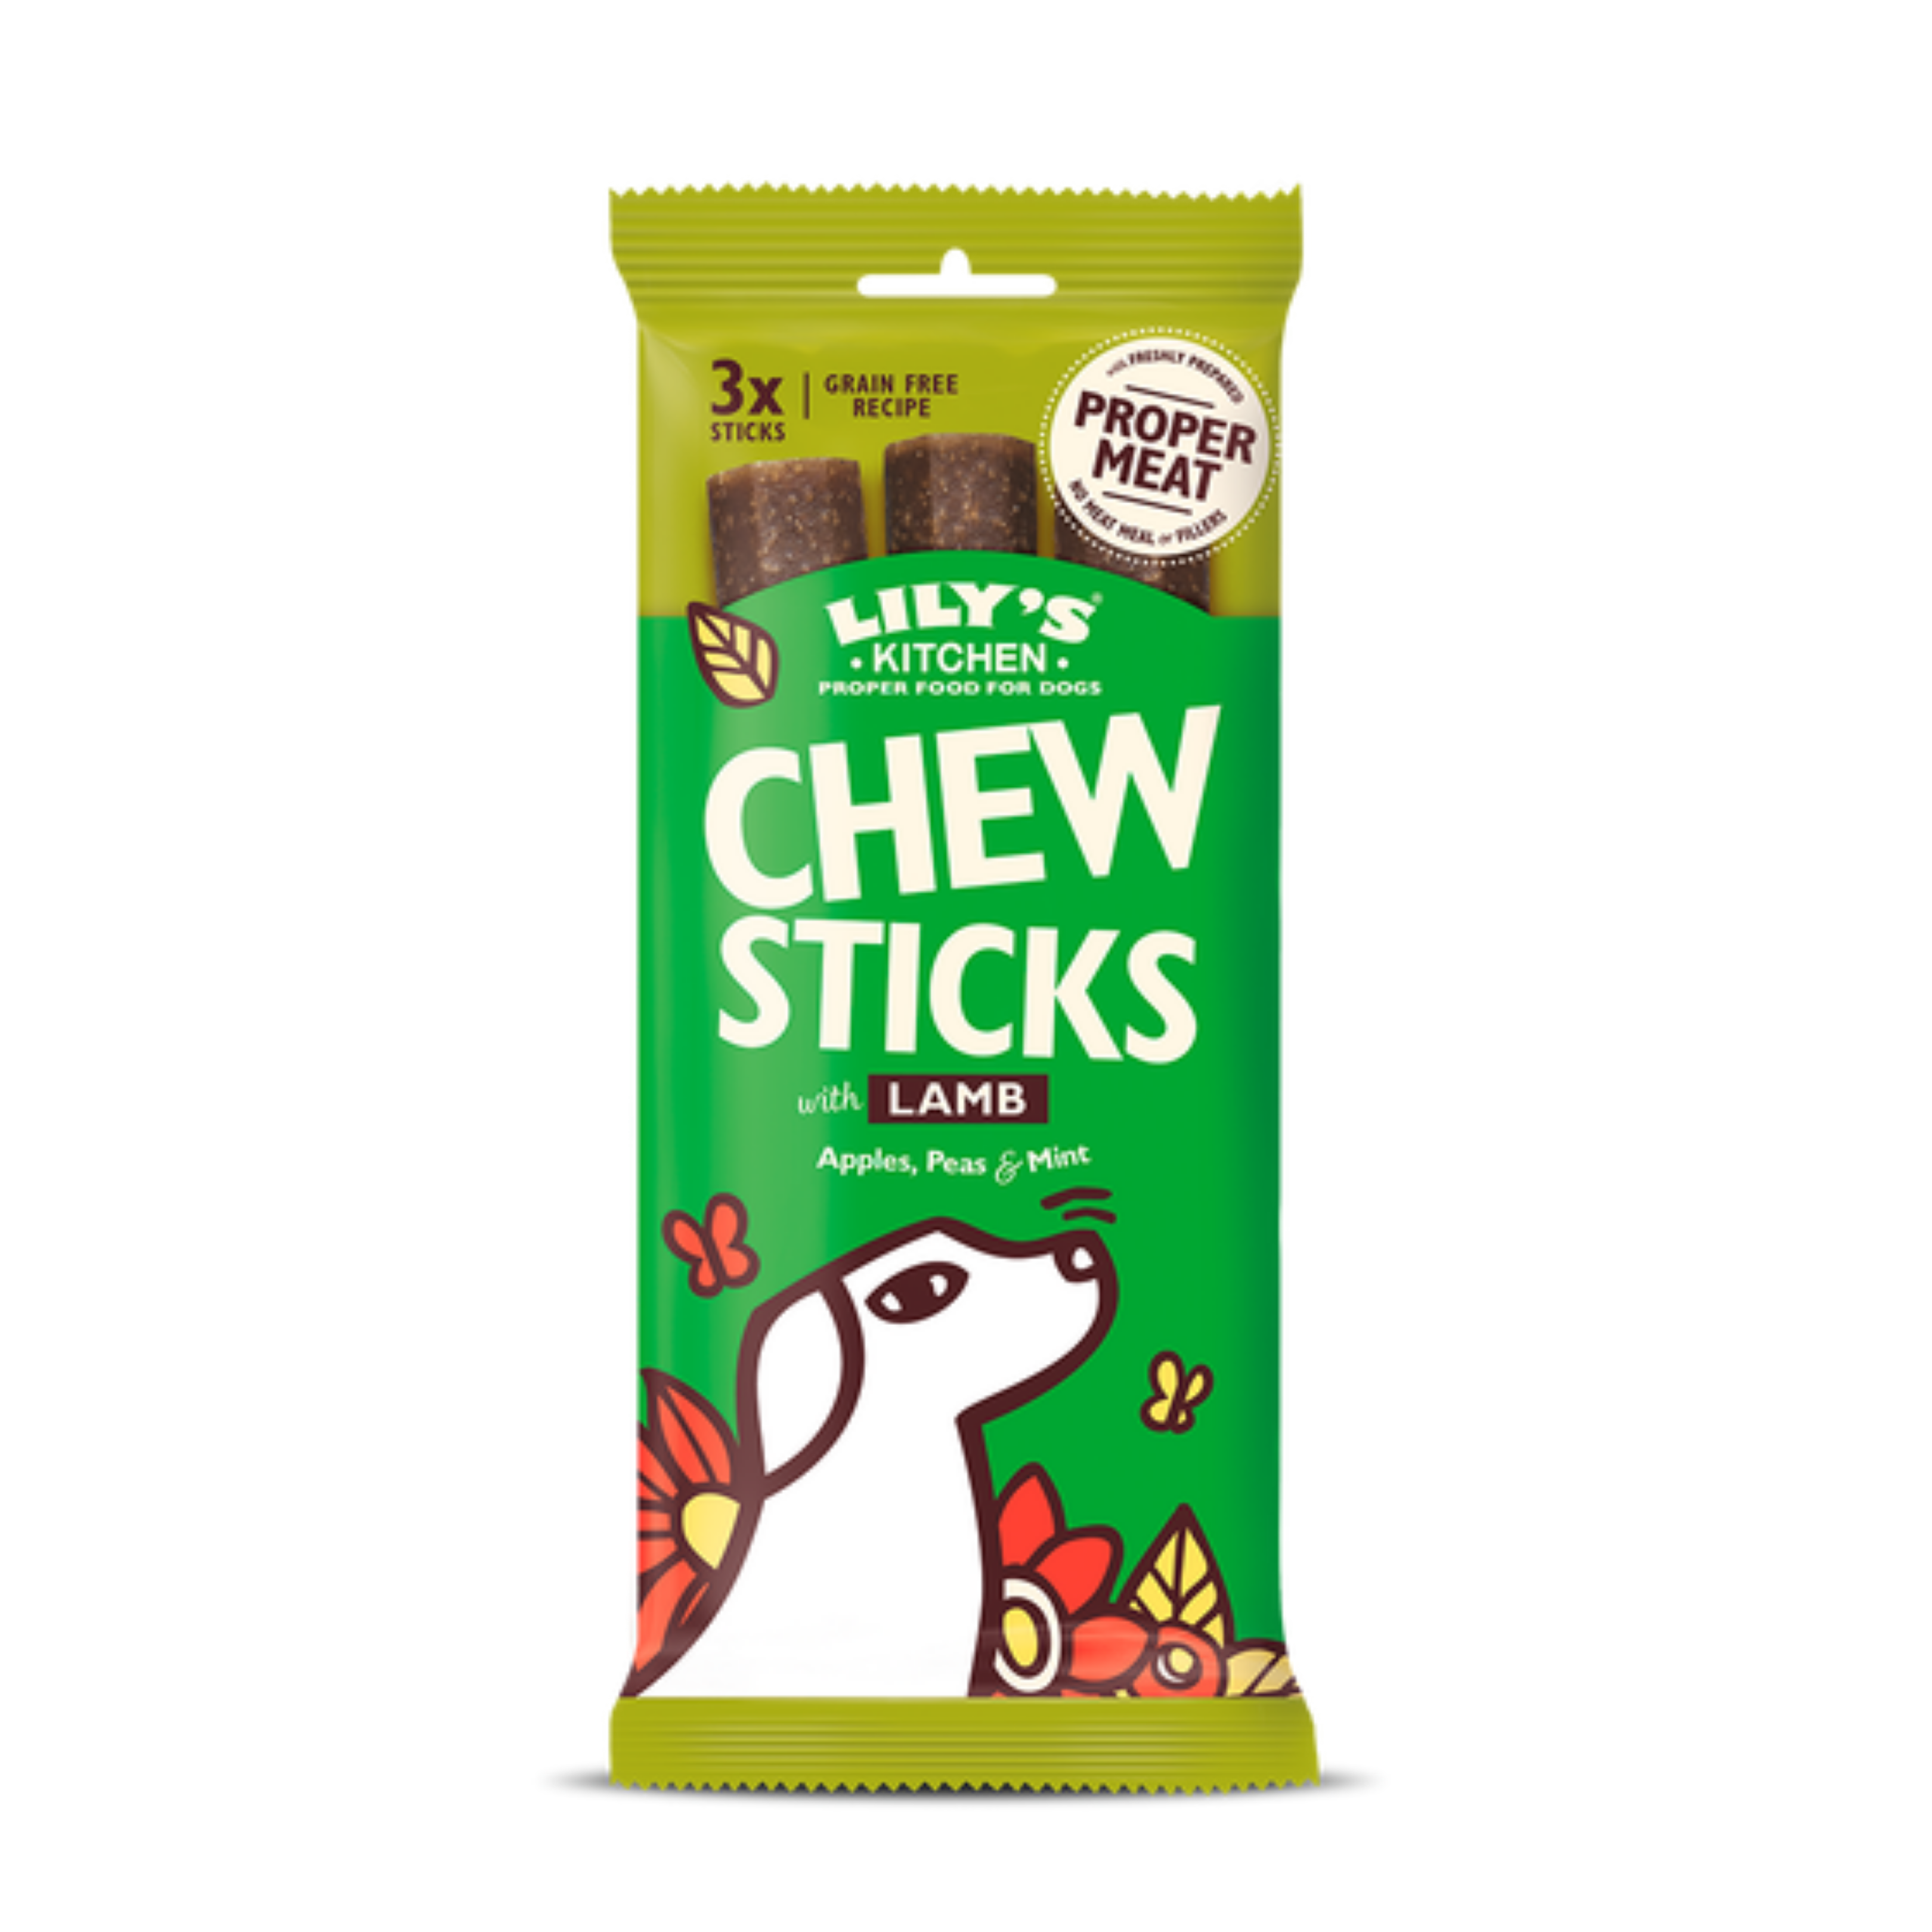 Dog Treats狗狗零食- Chew Sticks with Lamb羊肉咀嚼條